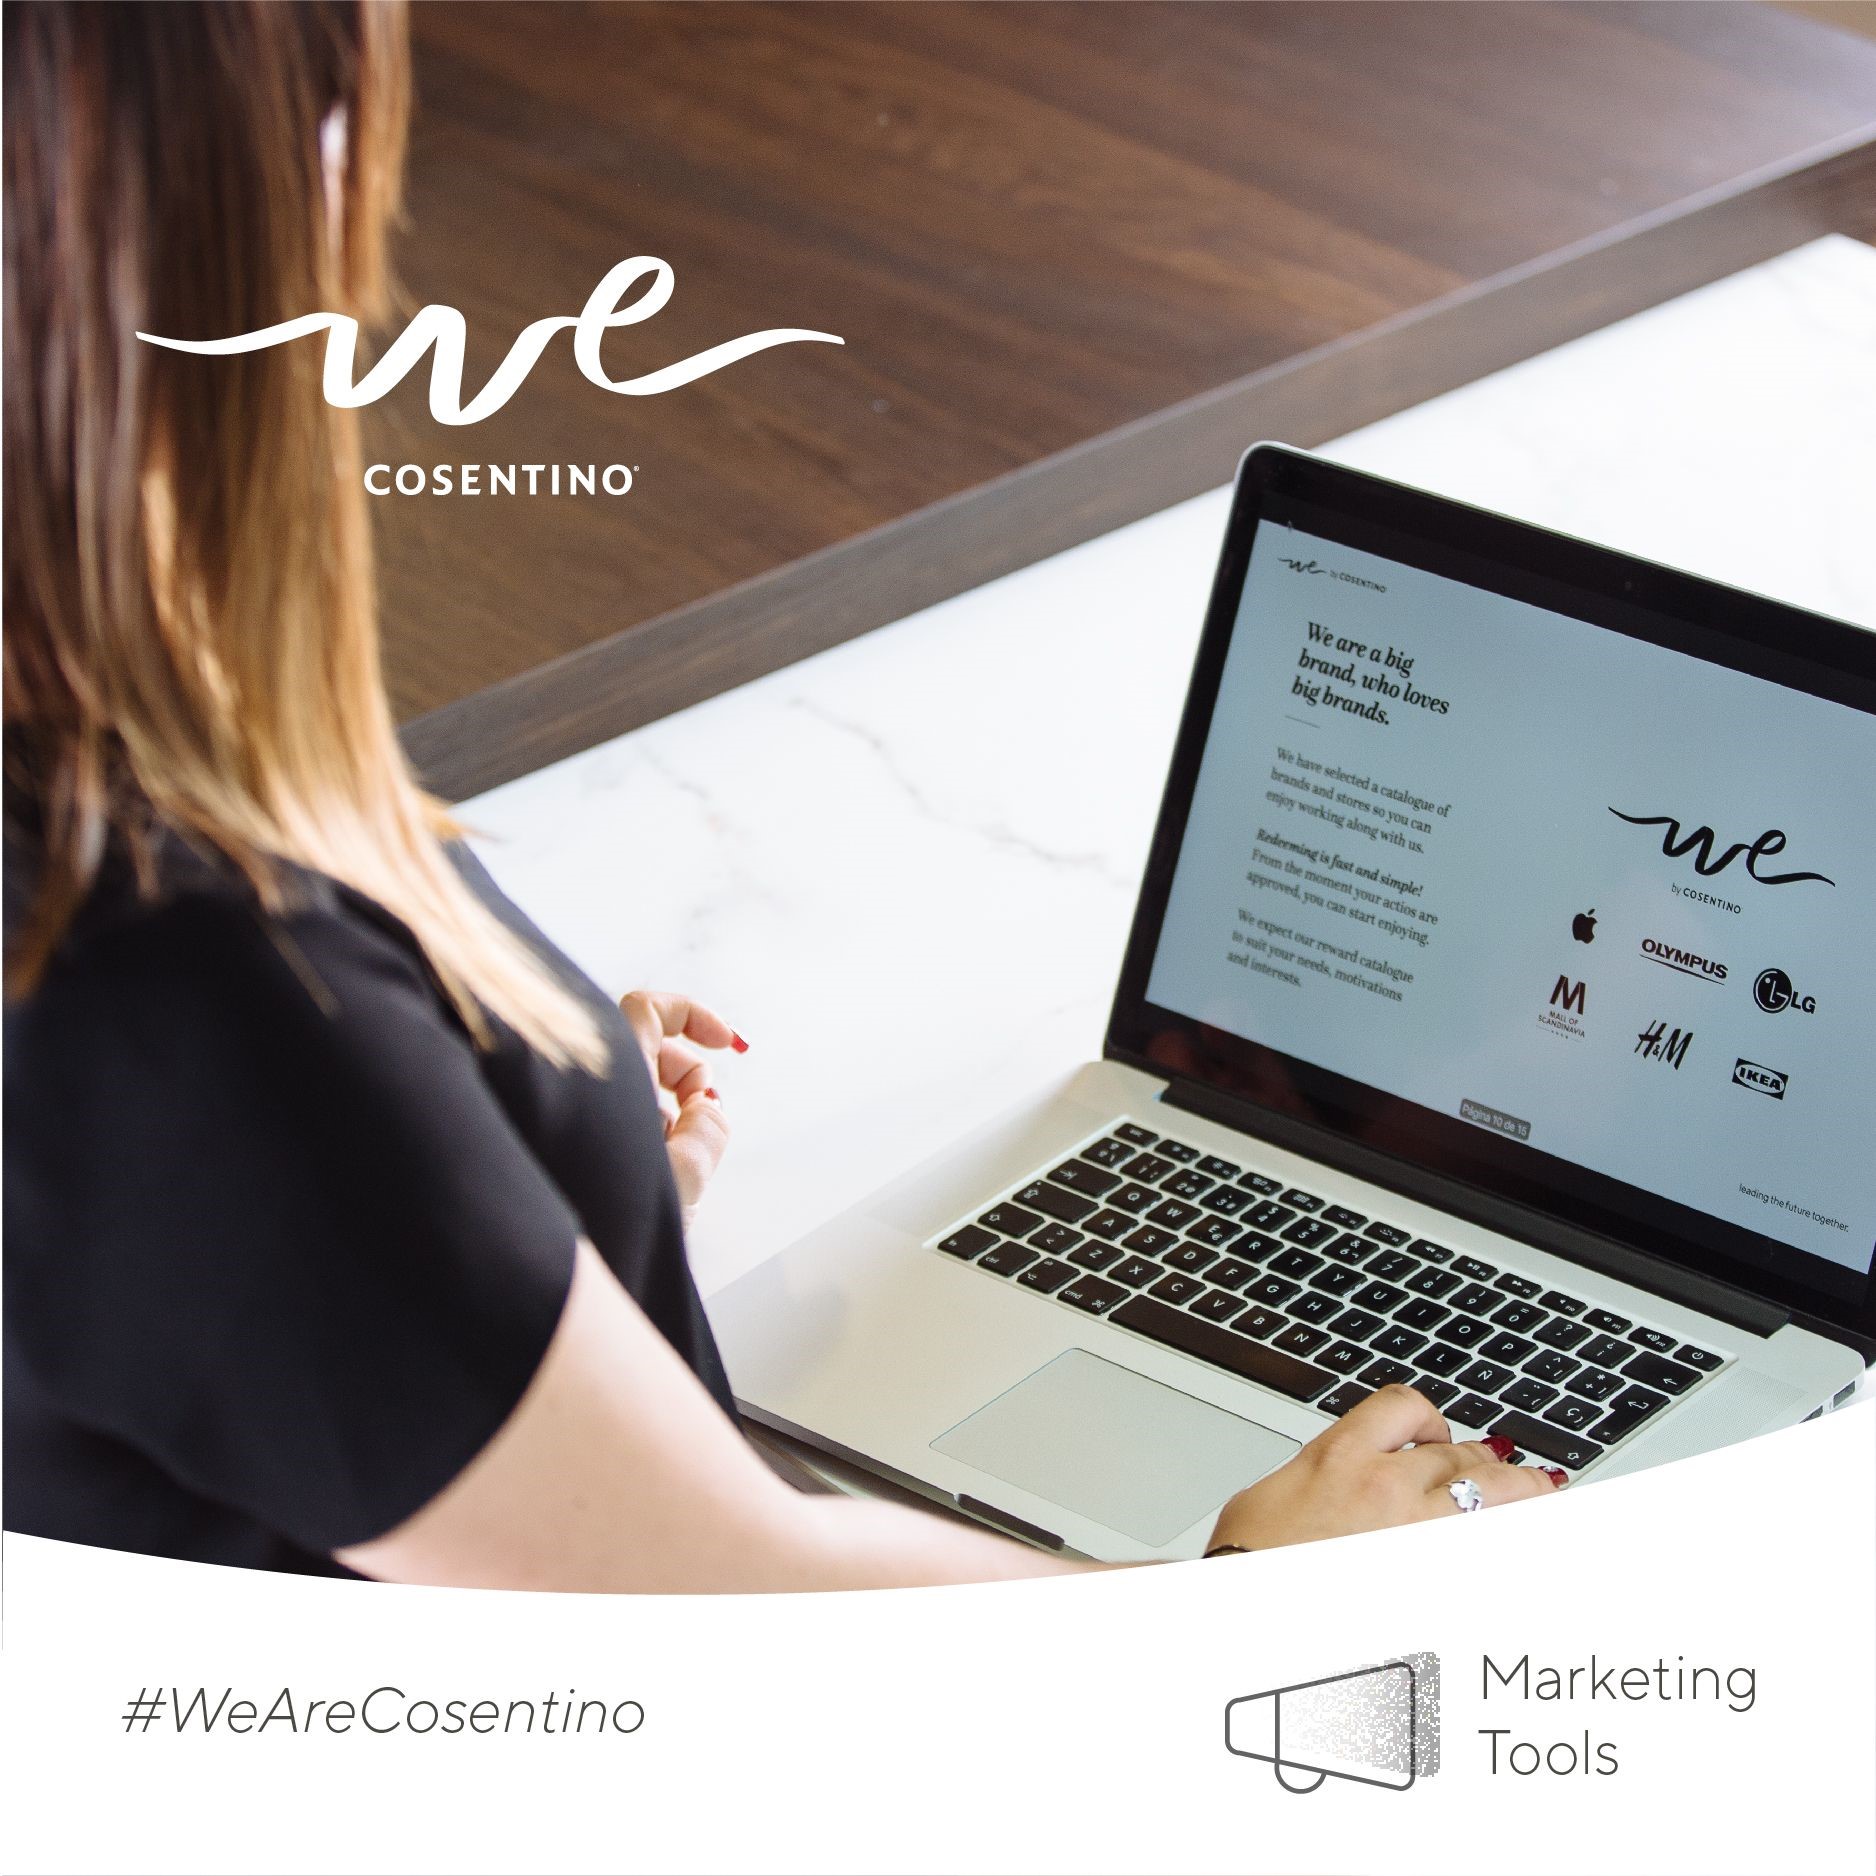 Cosentino Launches New Global Community for Professionals @GrupoCosentino